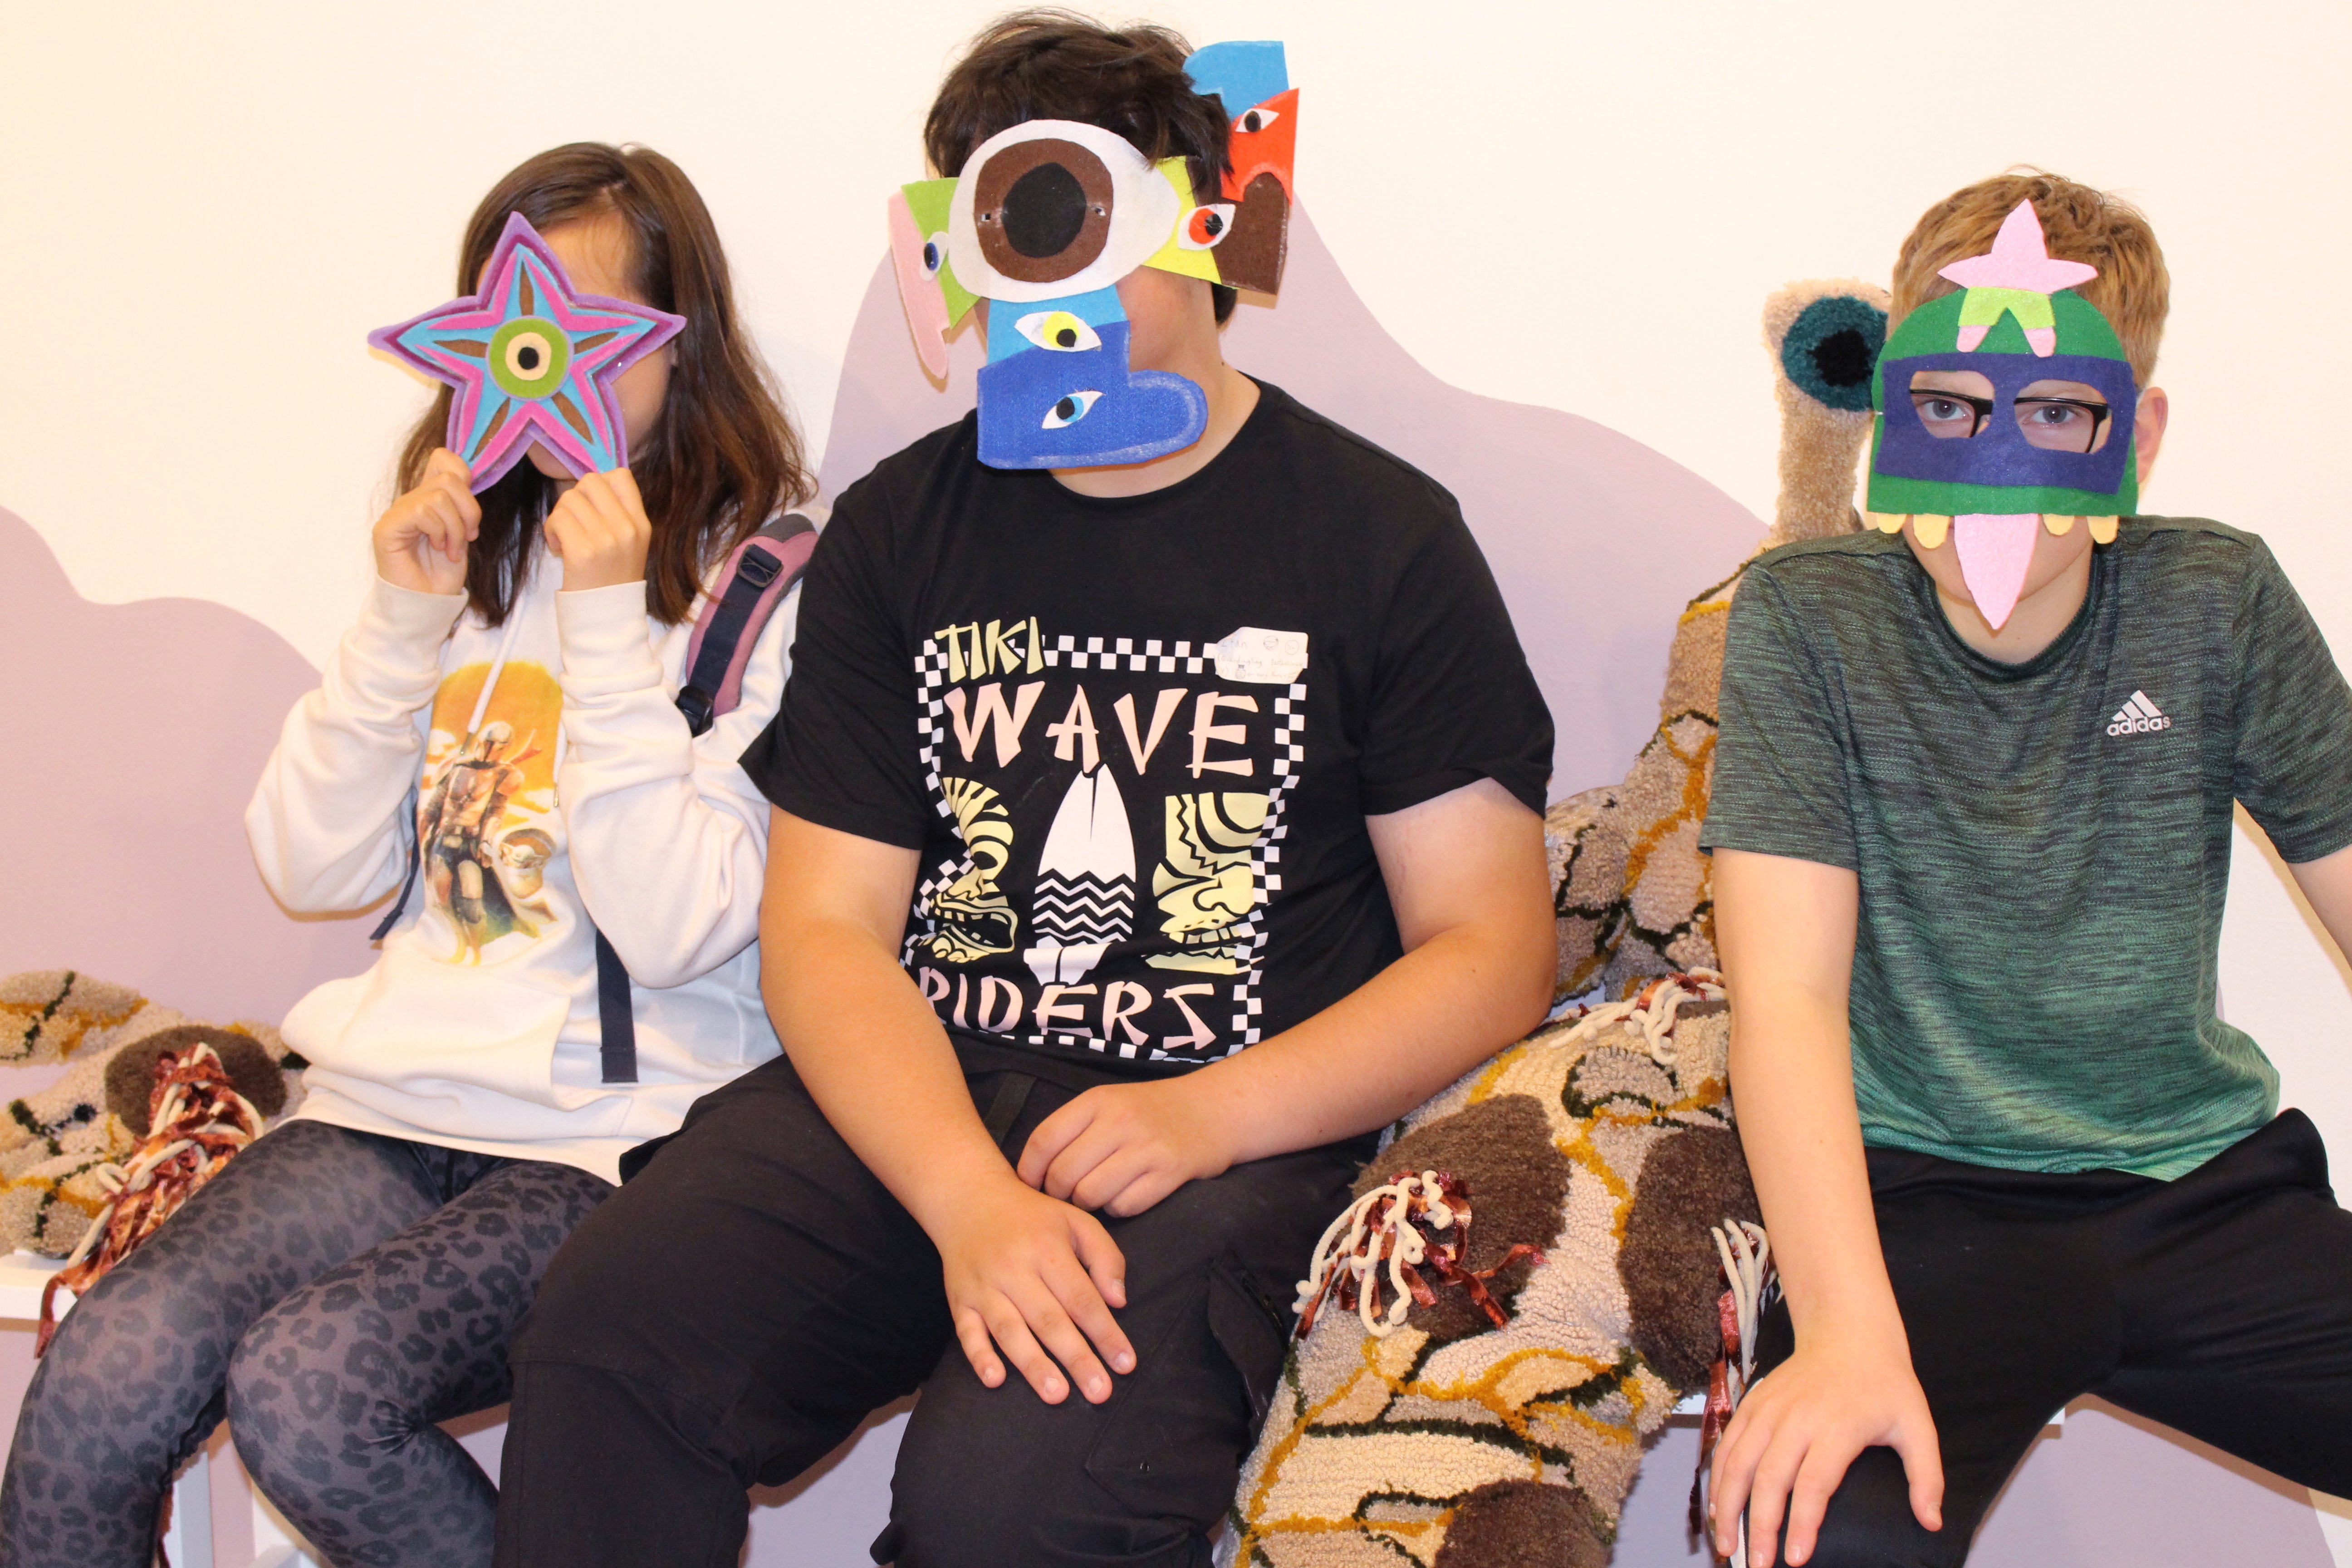 Workshop participants sat next to Non's 'Fail Snail' wearing handmade masks